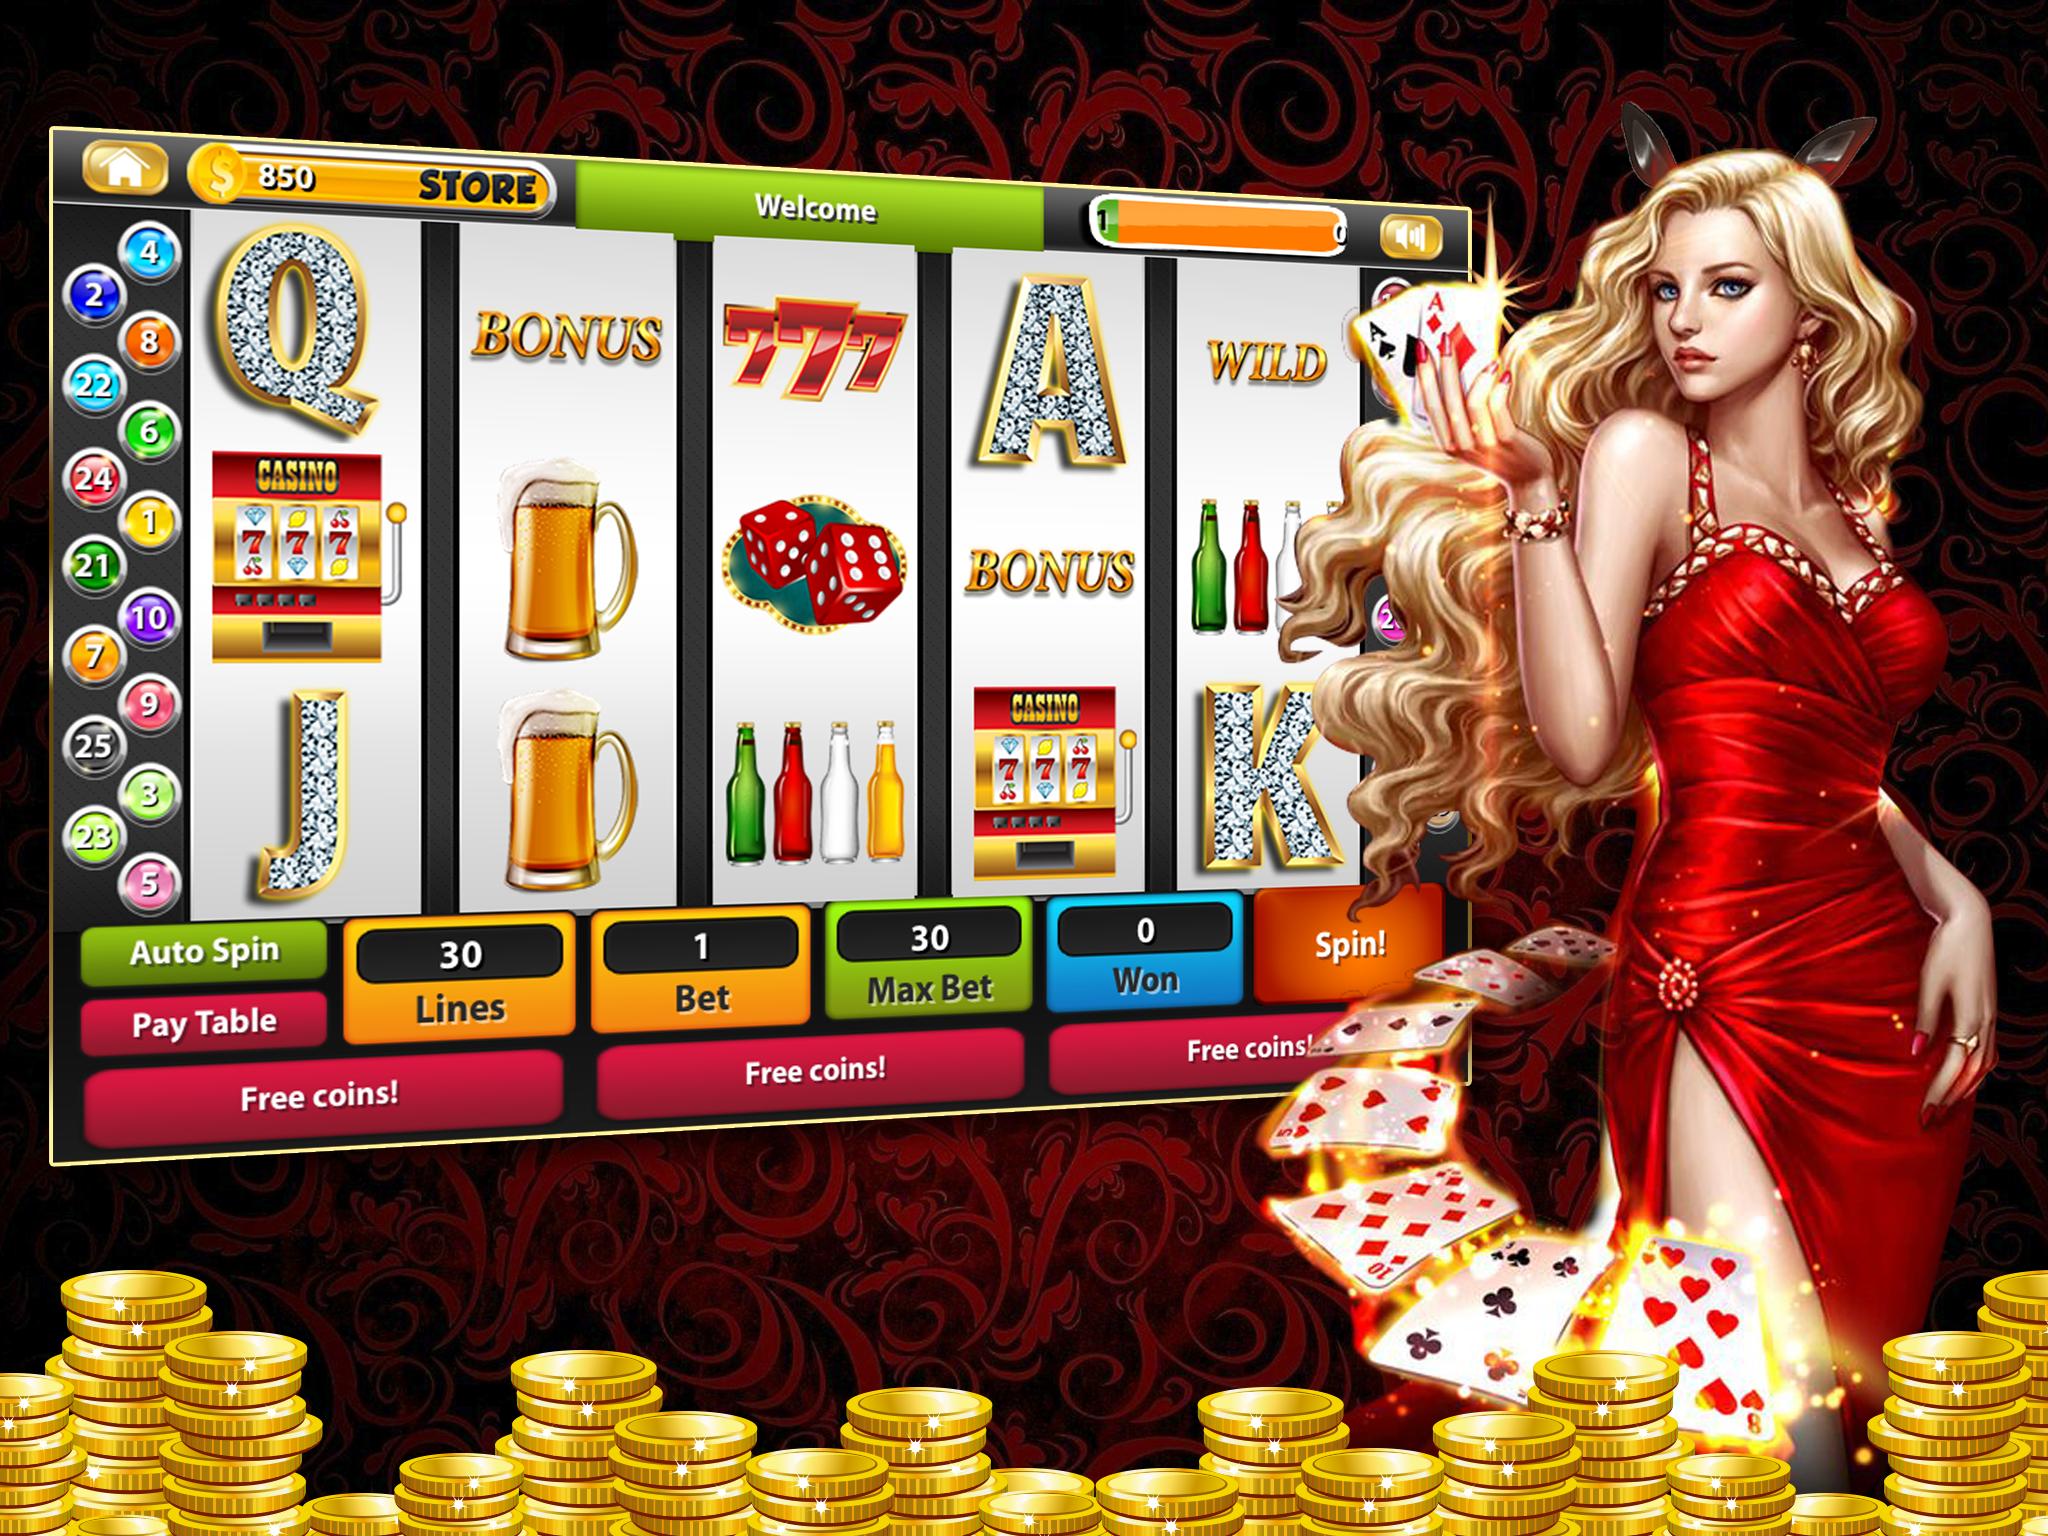 Royal Keno Slot Machine Casino for Android - APK Download